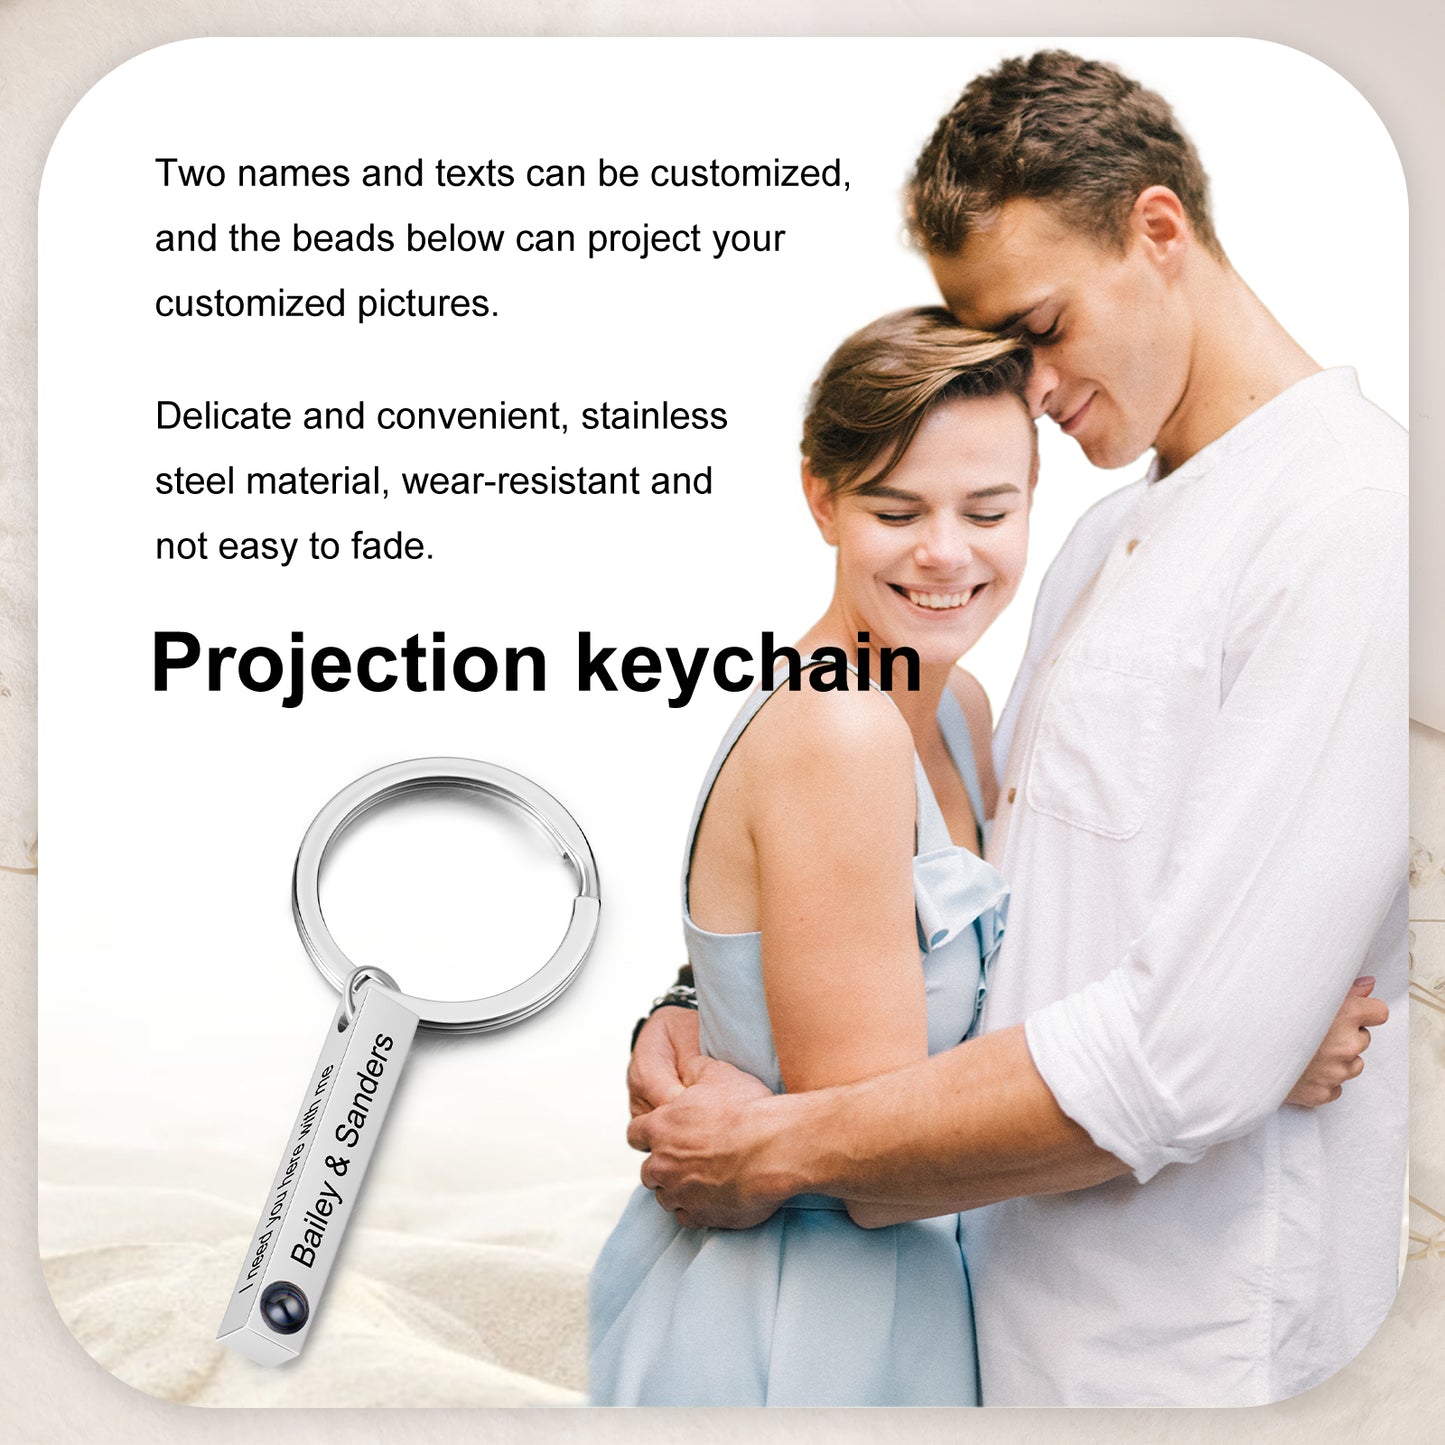 Photo Projection Keychain